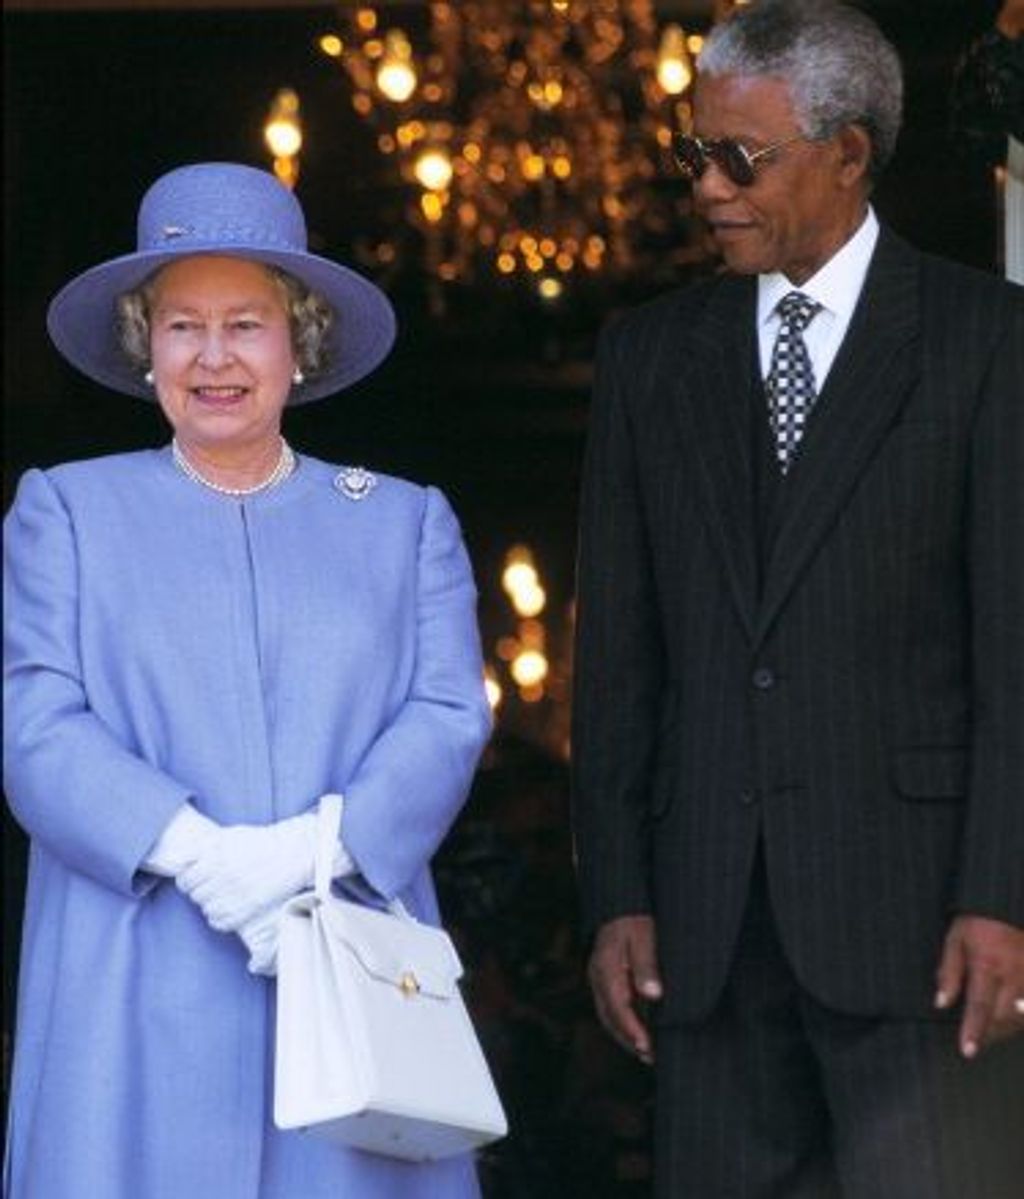 Queen Elizabeth II with Nelson Mandela in 1995 in South Africa